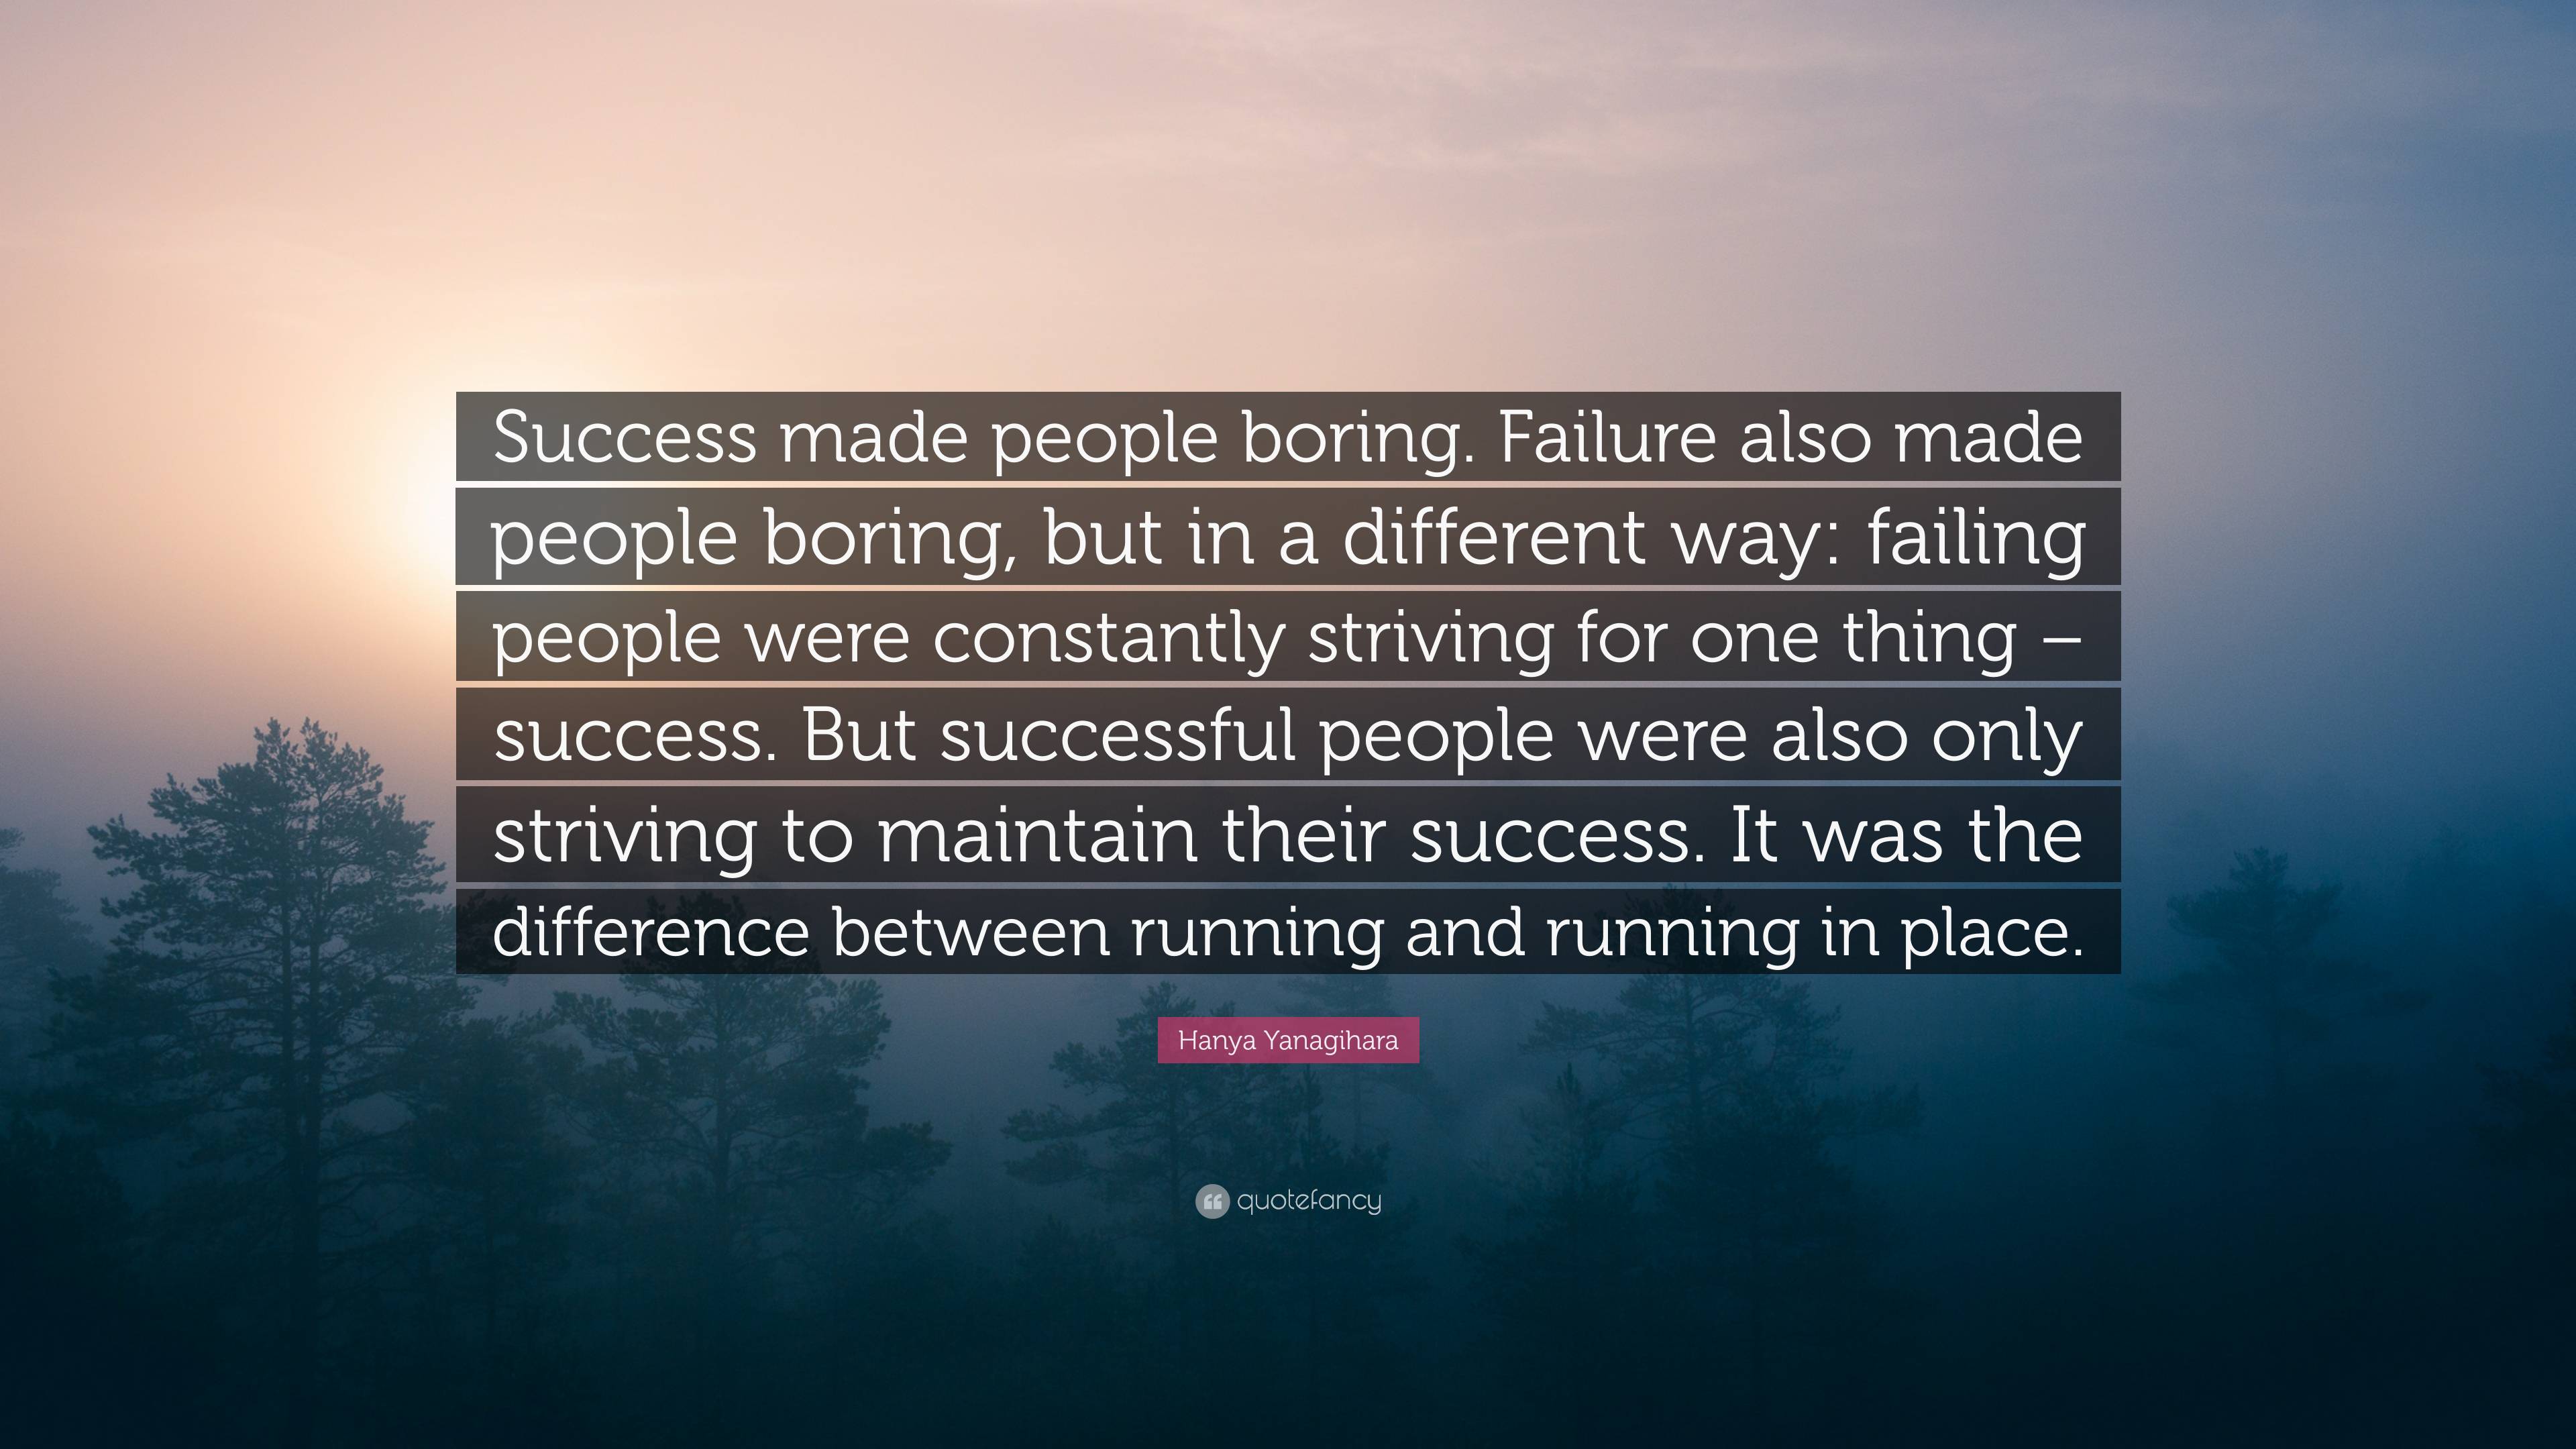 Hanya Yanagihara Quote: “Success made people boring. Failure also made ...